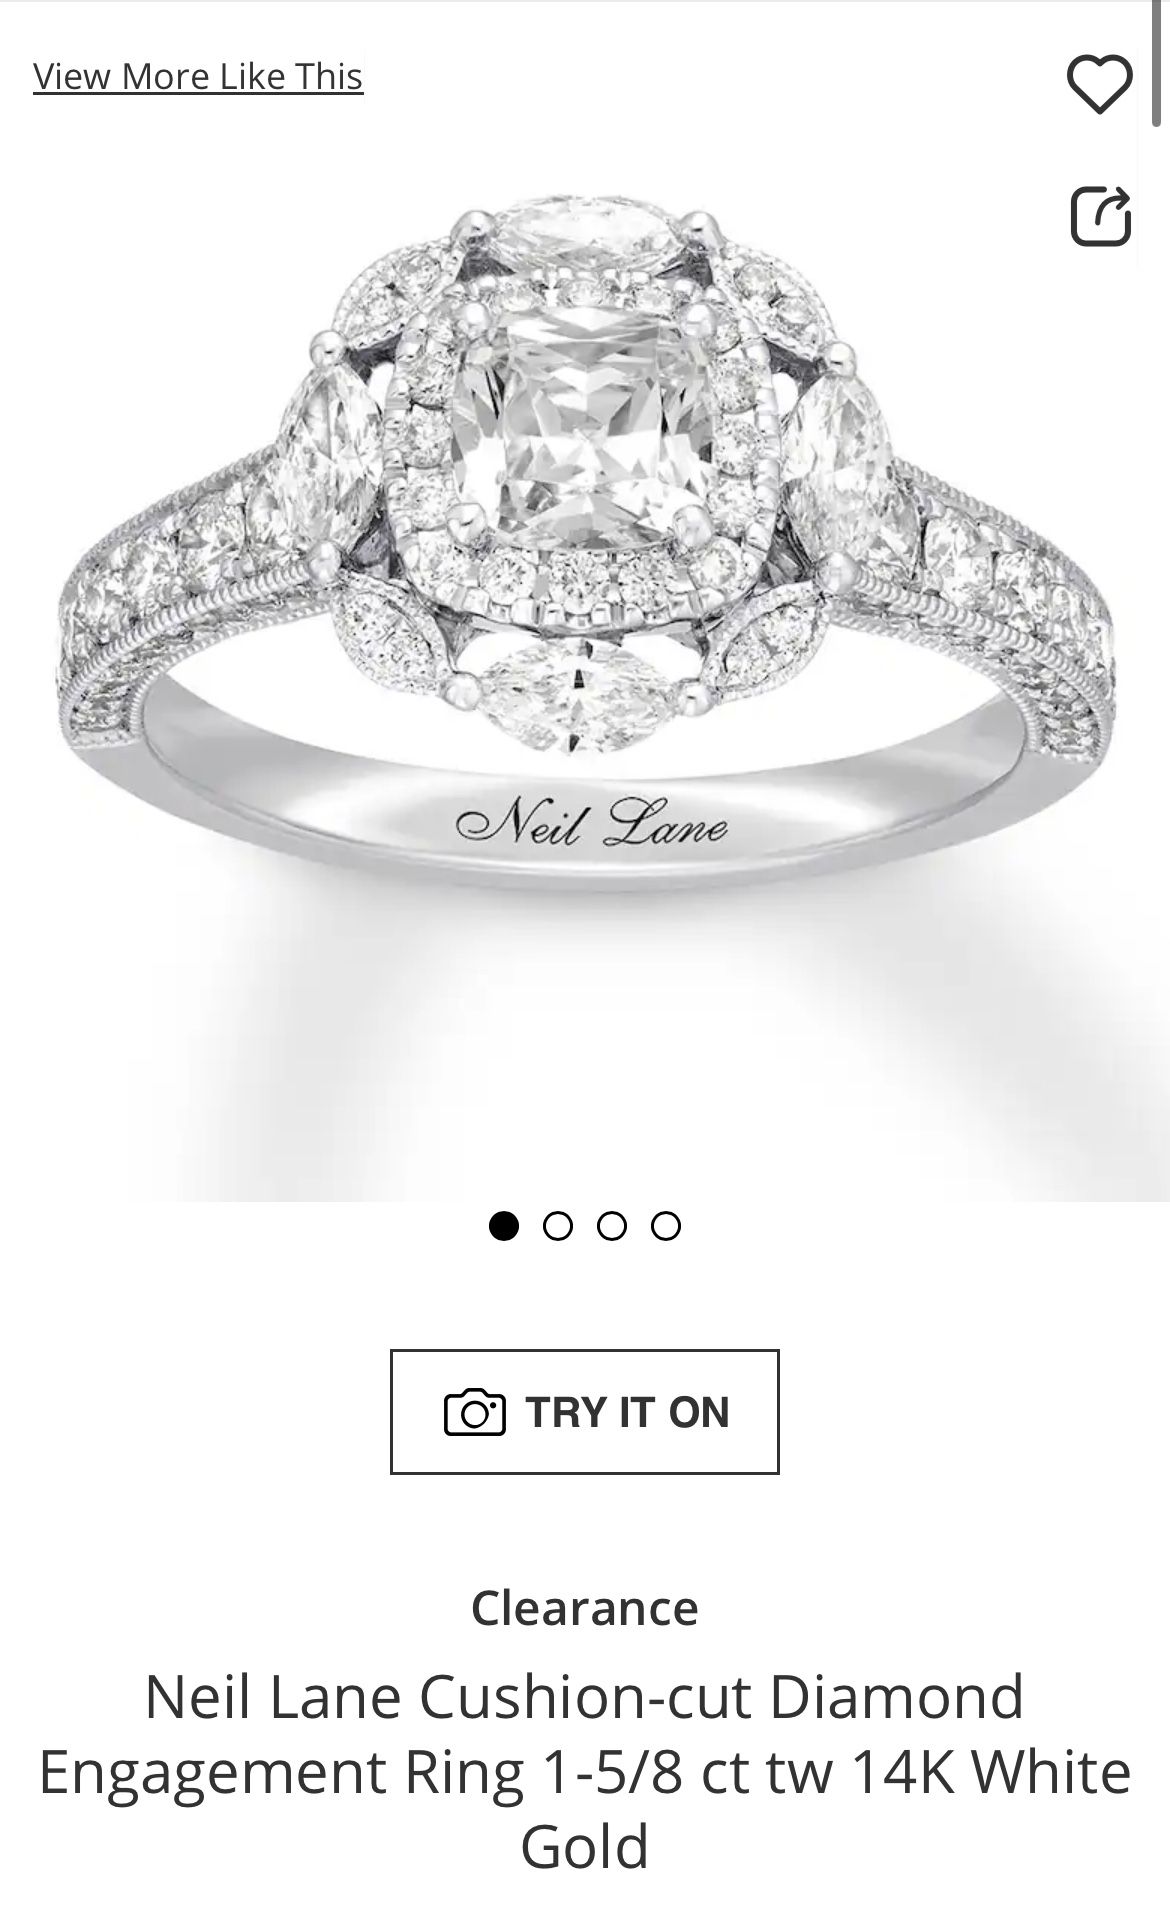 Neil Lane Cushion-cut Diamond Engagement Ring